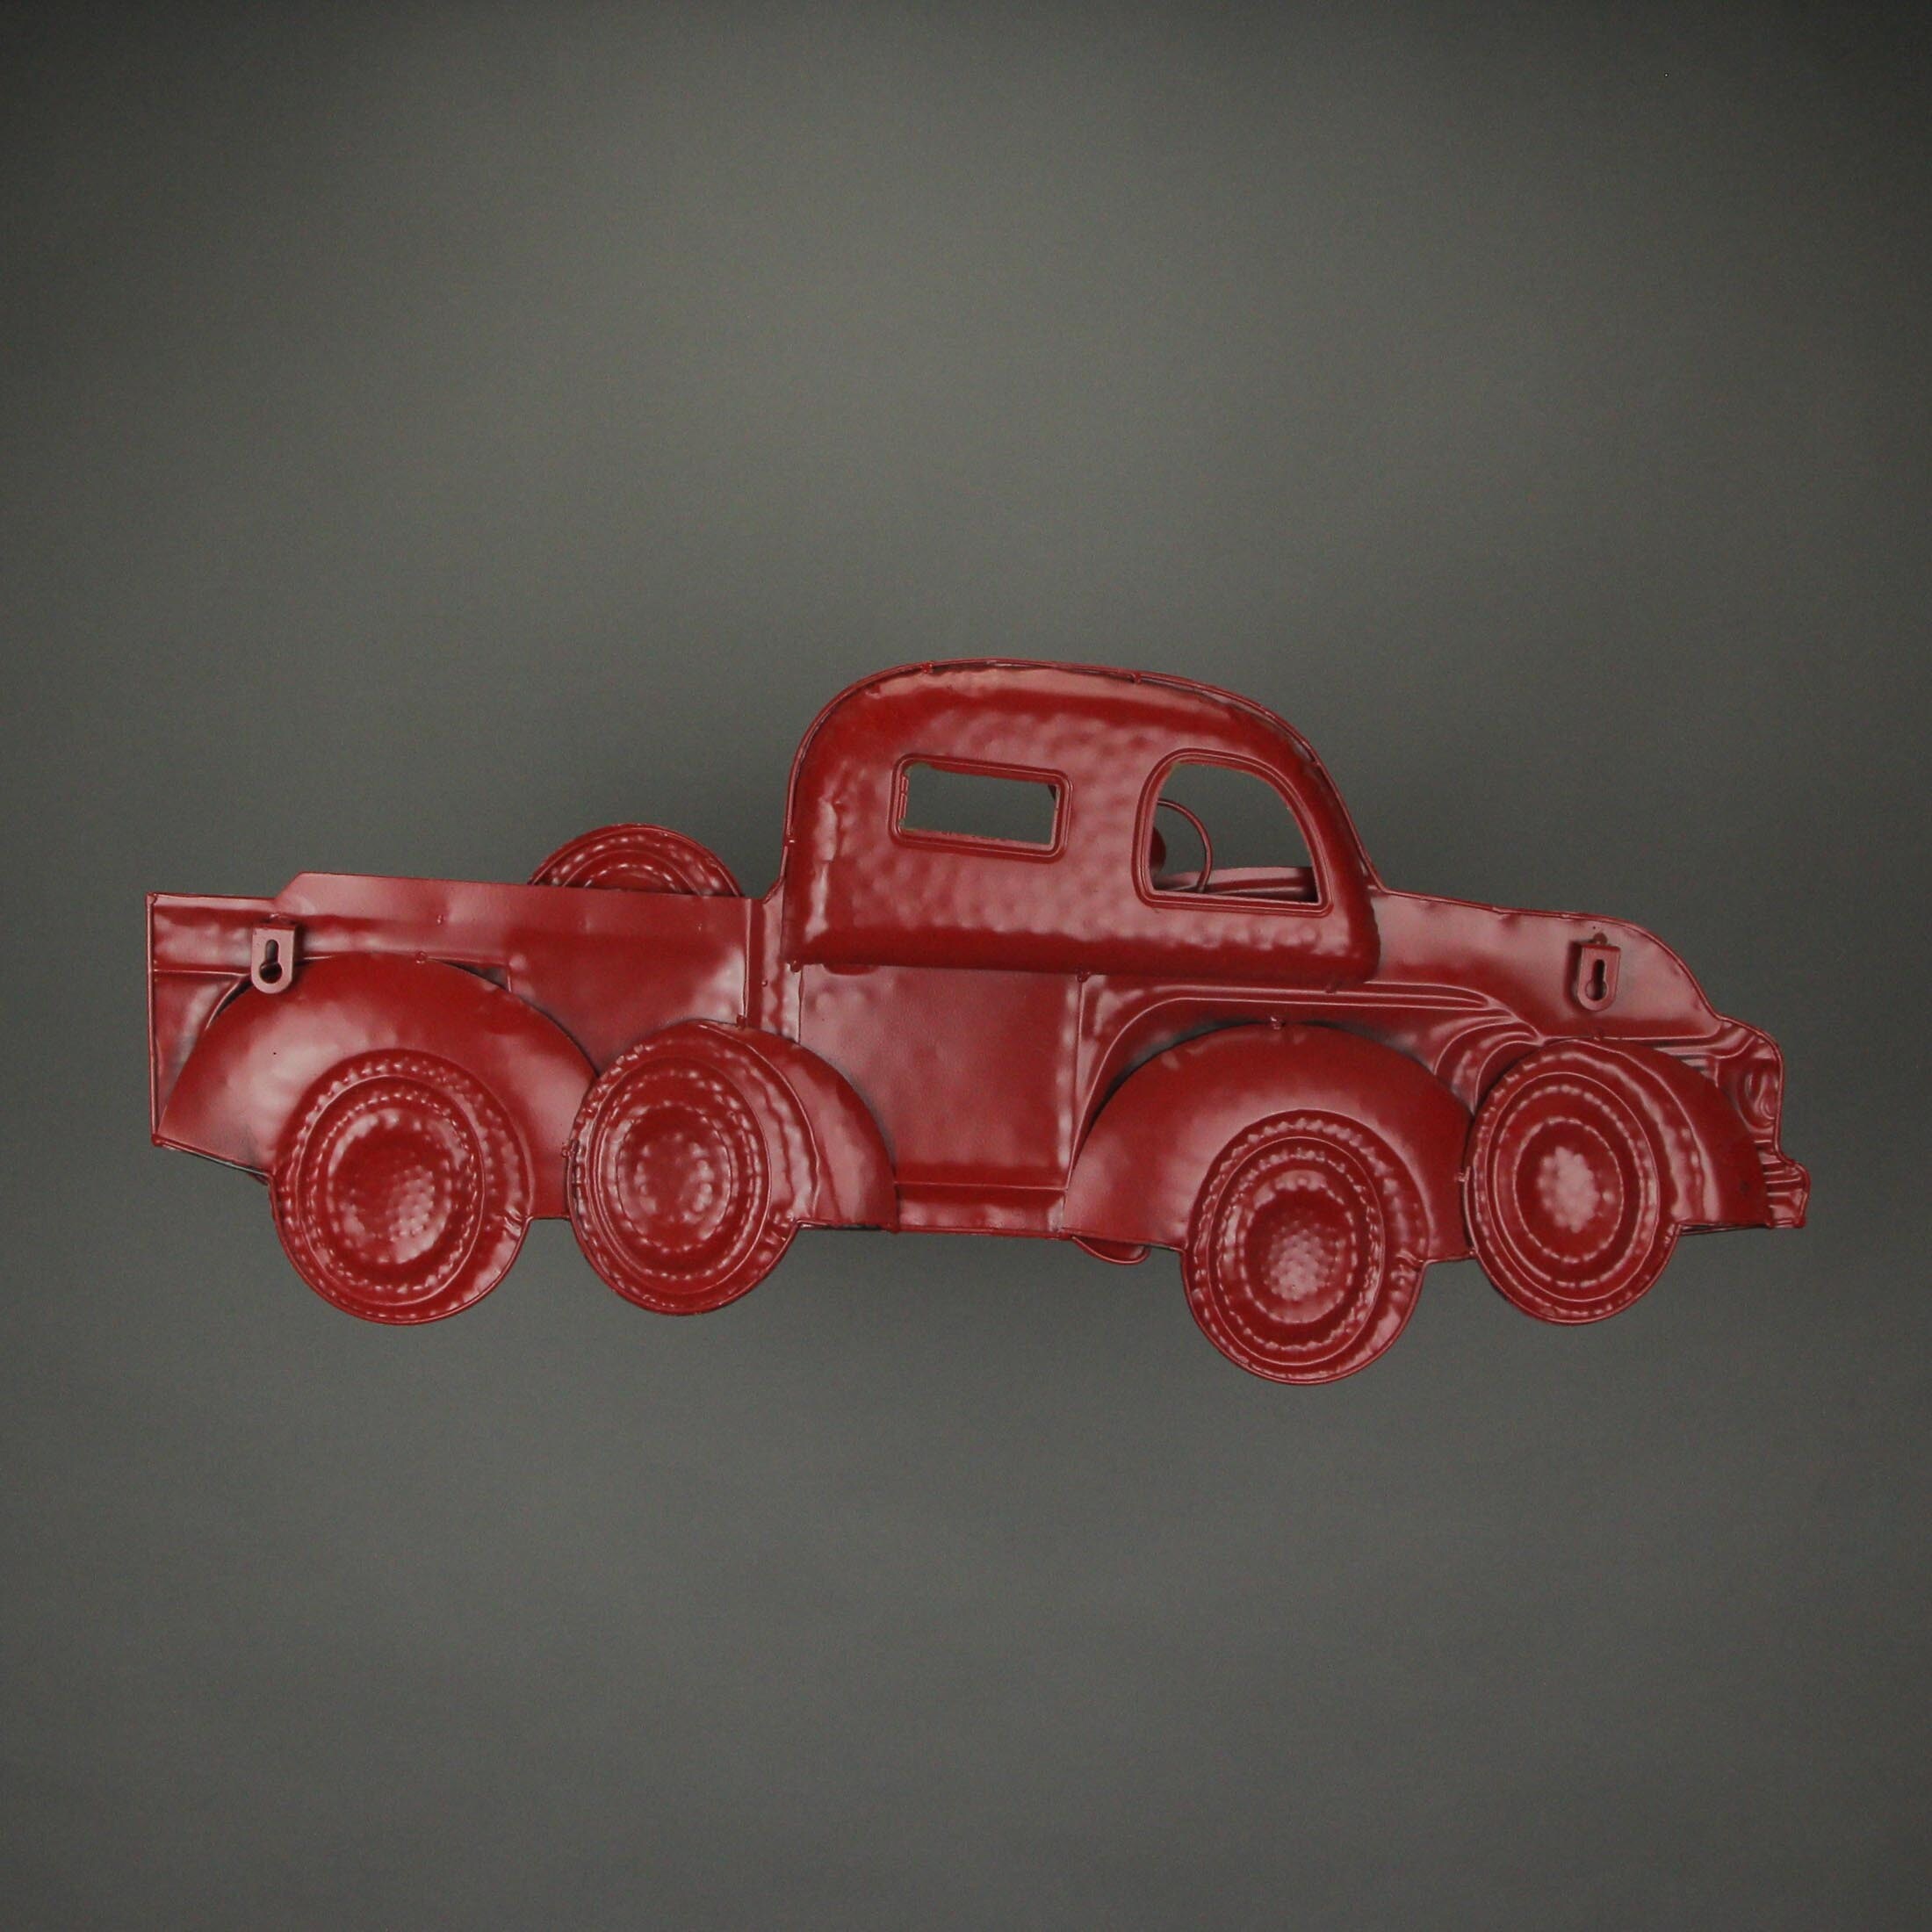 26 Inch Metal Vintage Red Pickup Truck Rustic Wall Sculpture Art